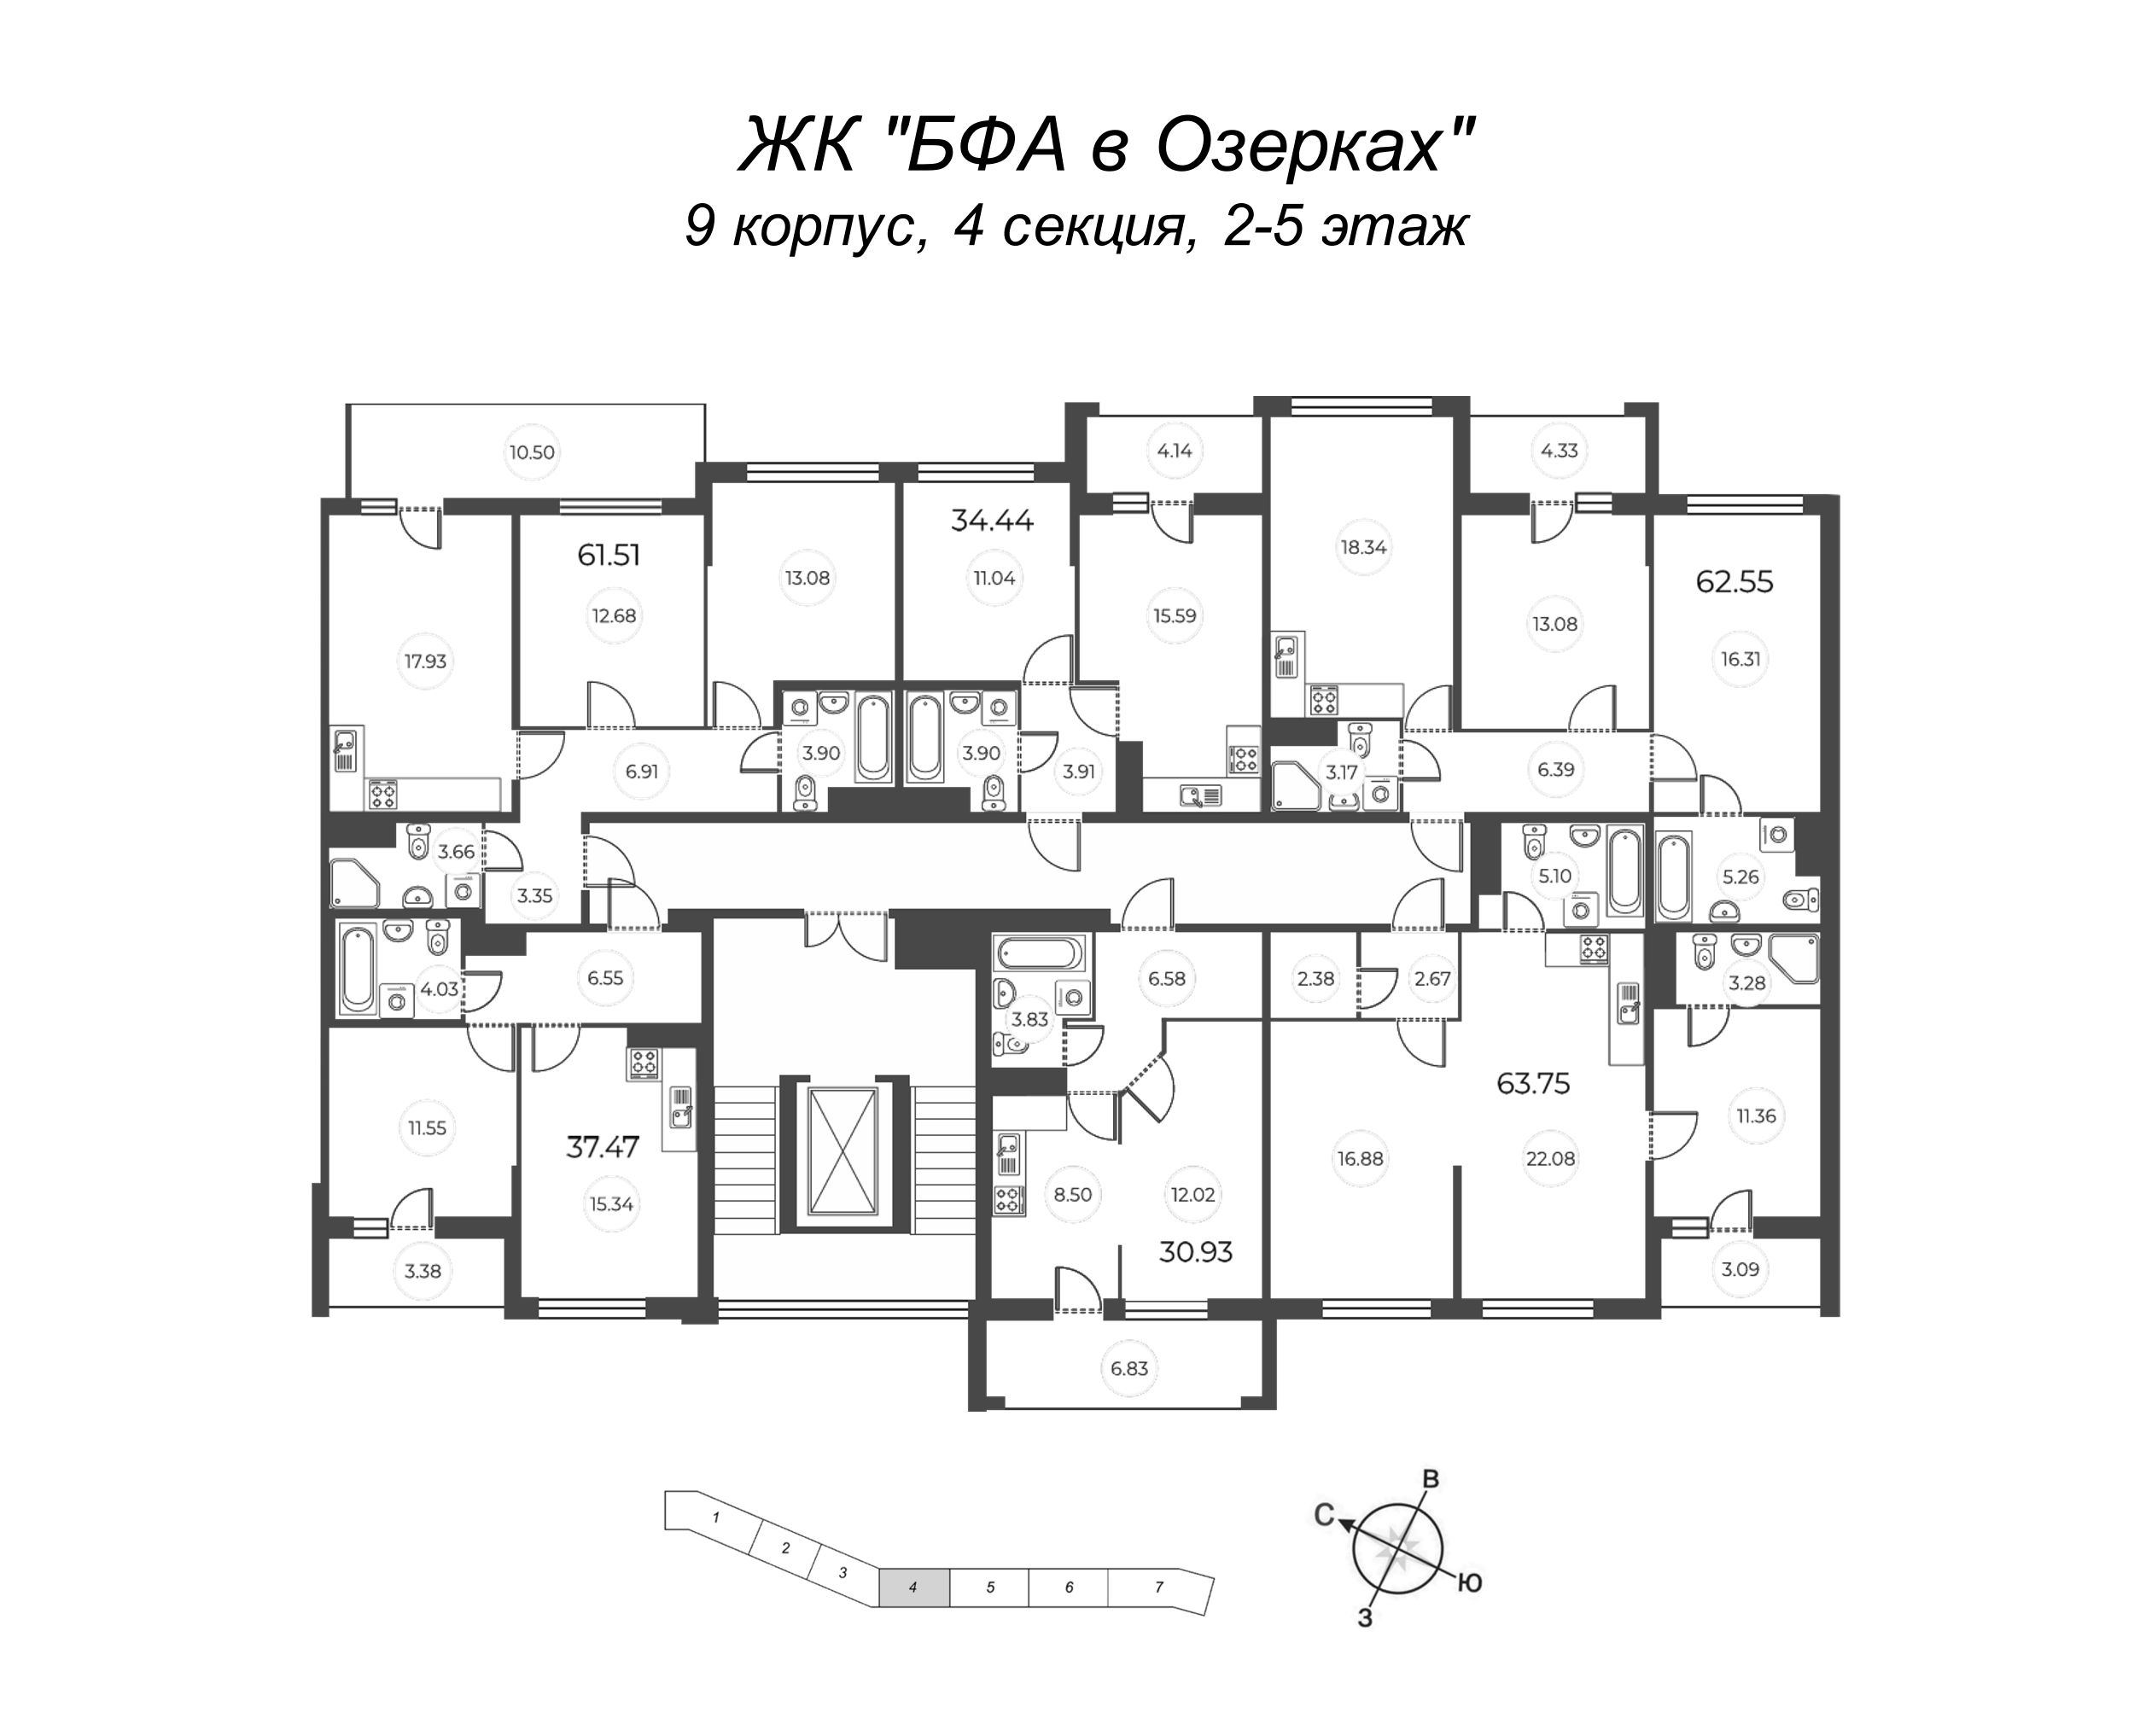 2-комнатная (Евро) квартира, 39.16 м² - планировка этажа